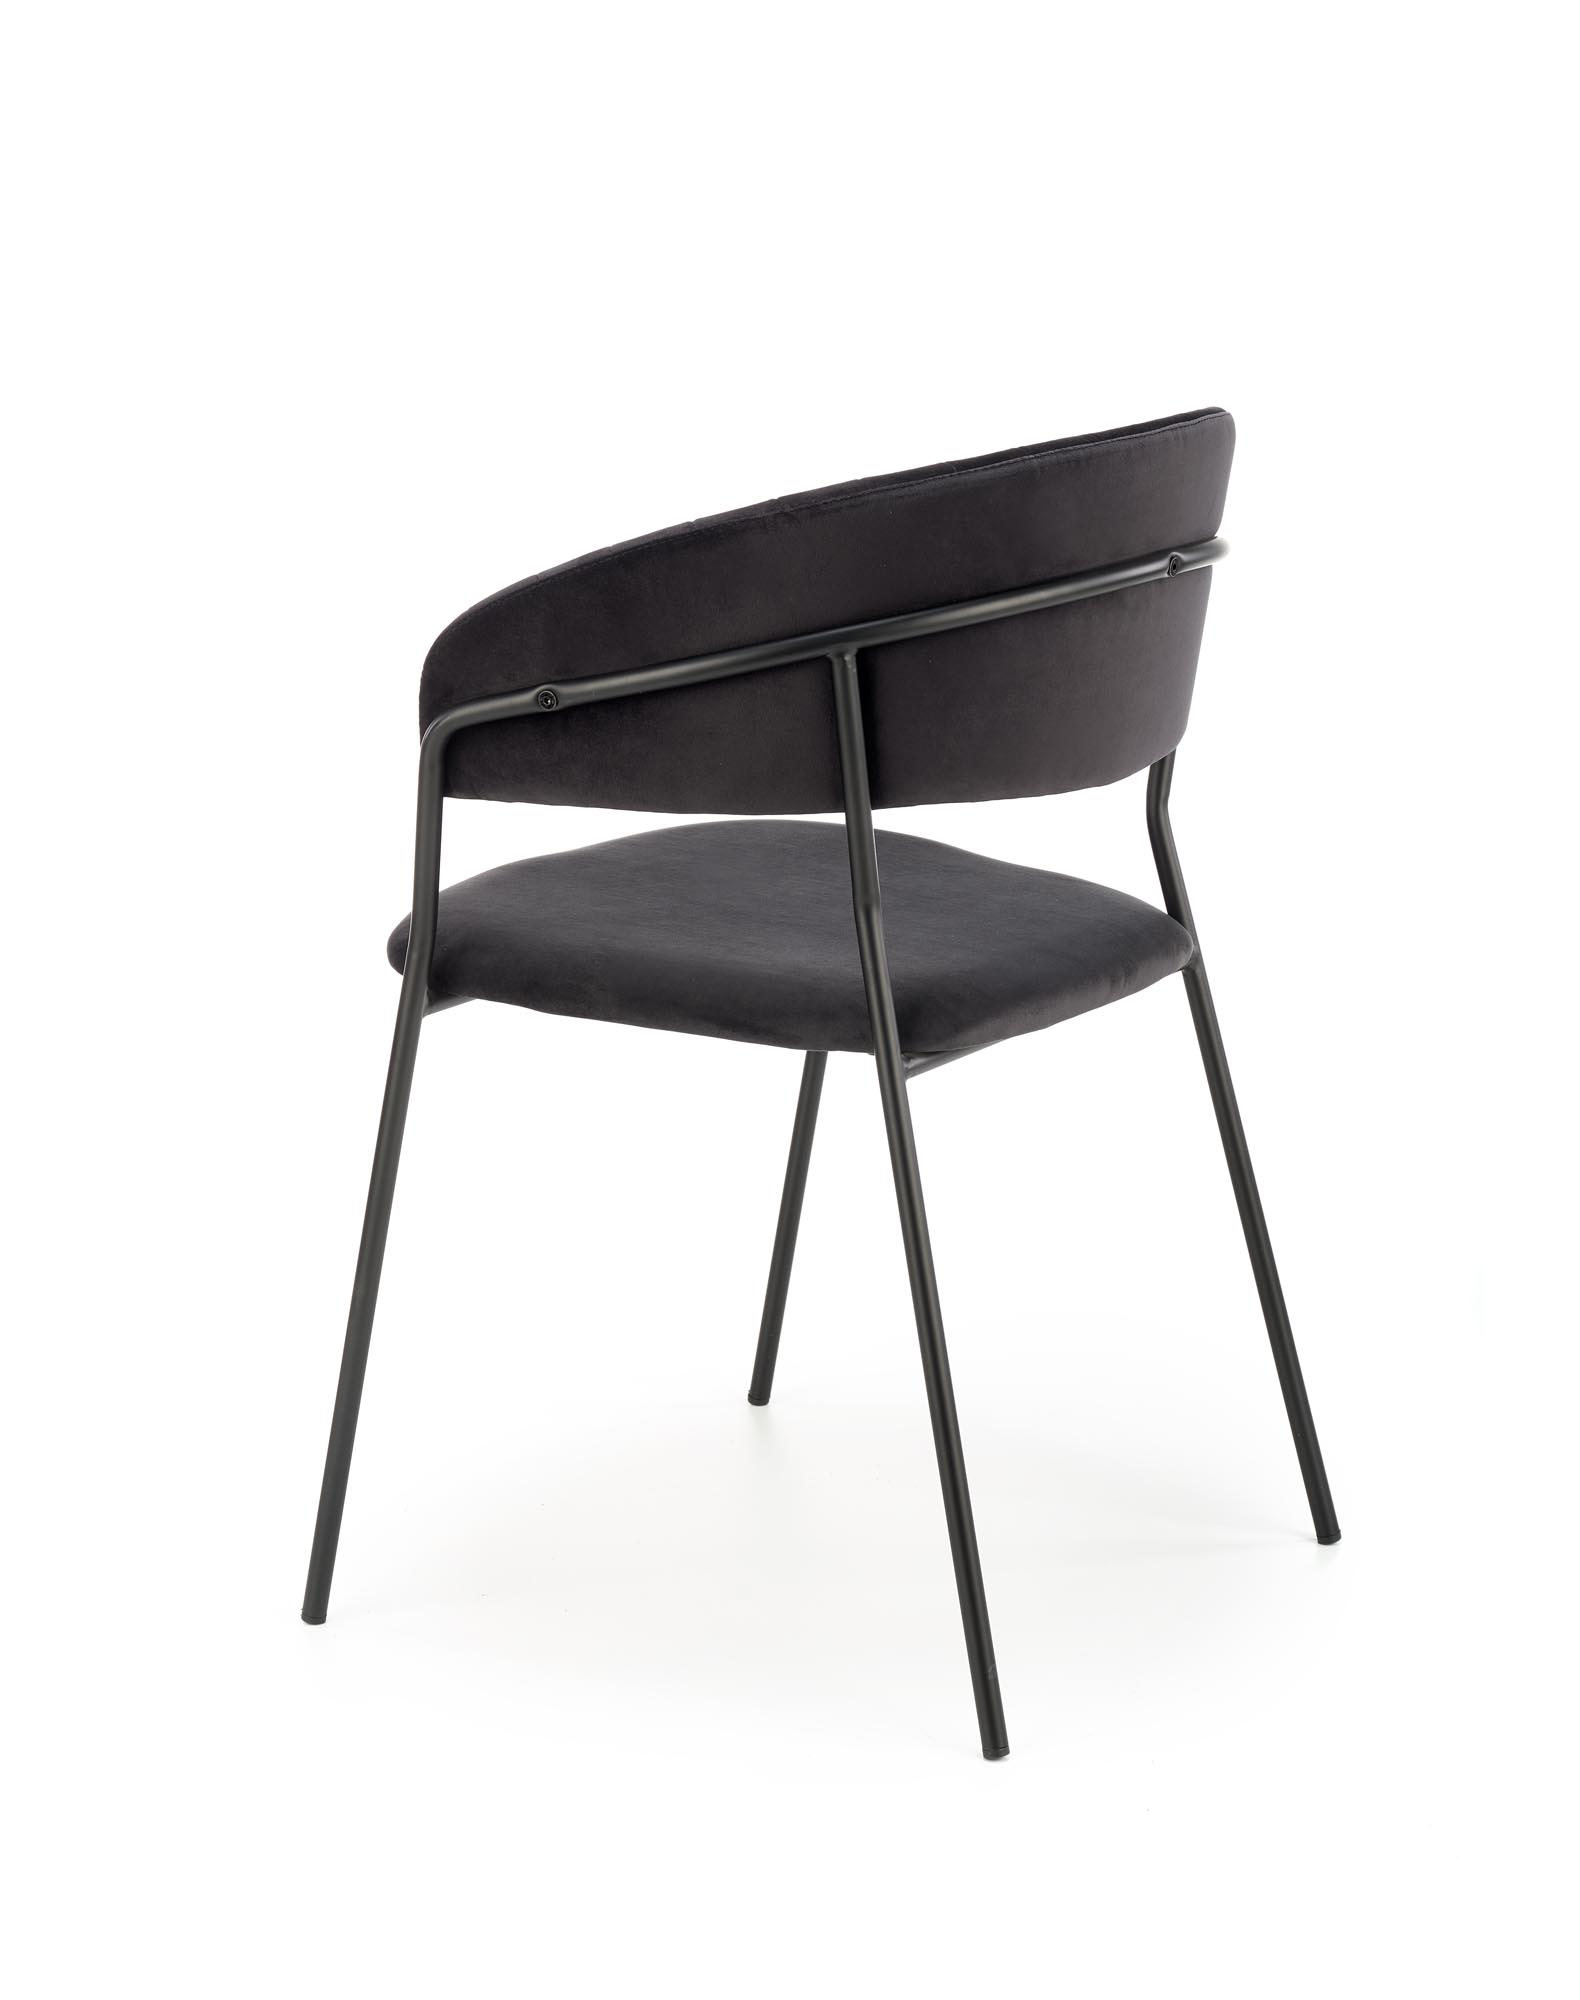 K426 stolica, boja: crna